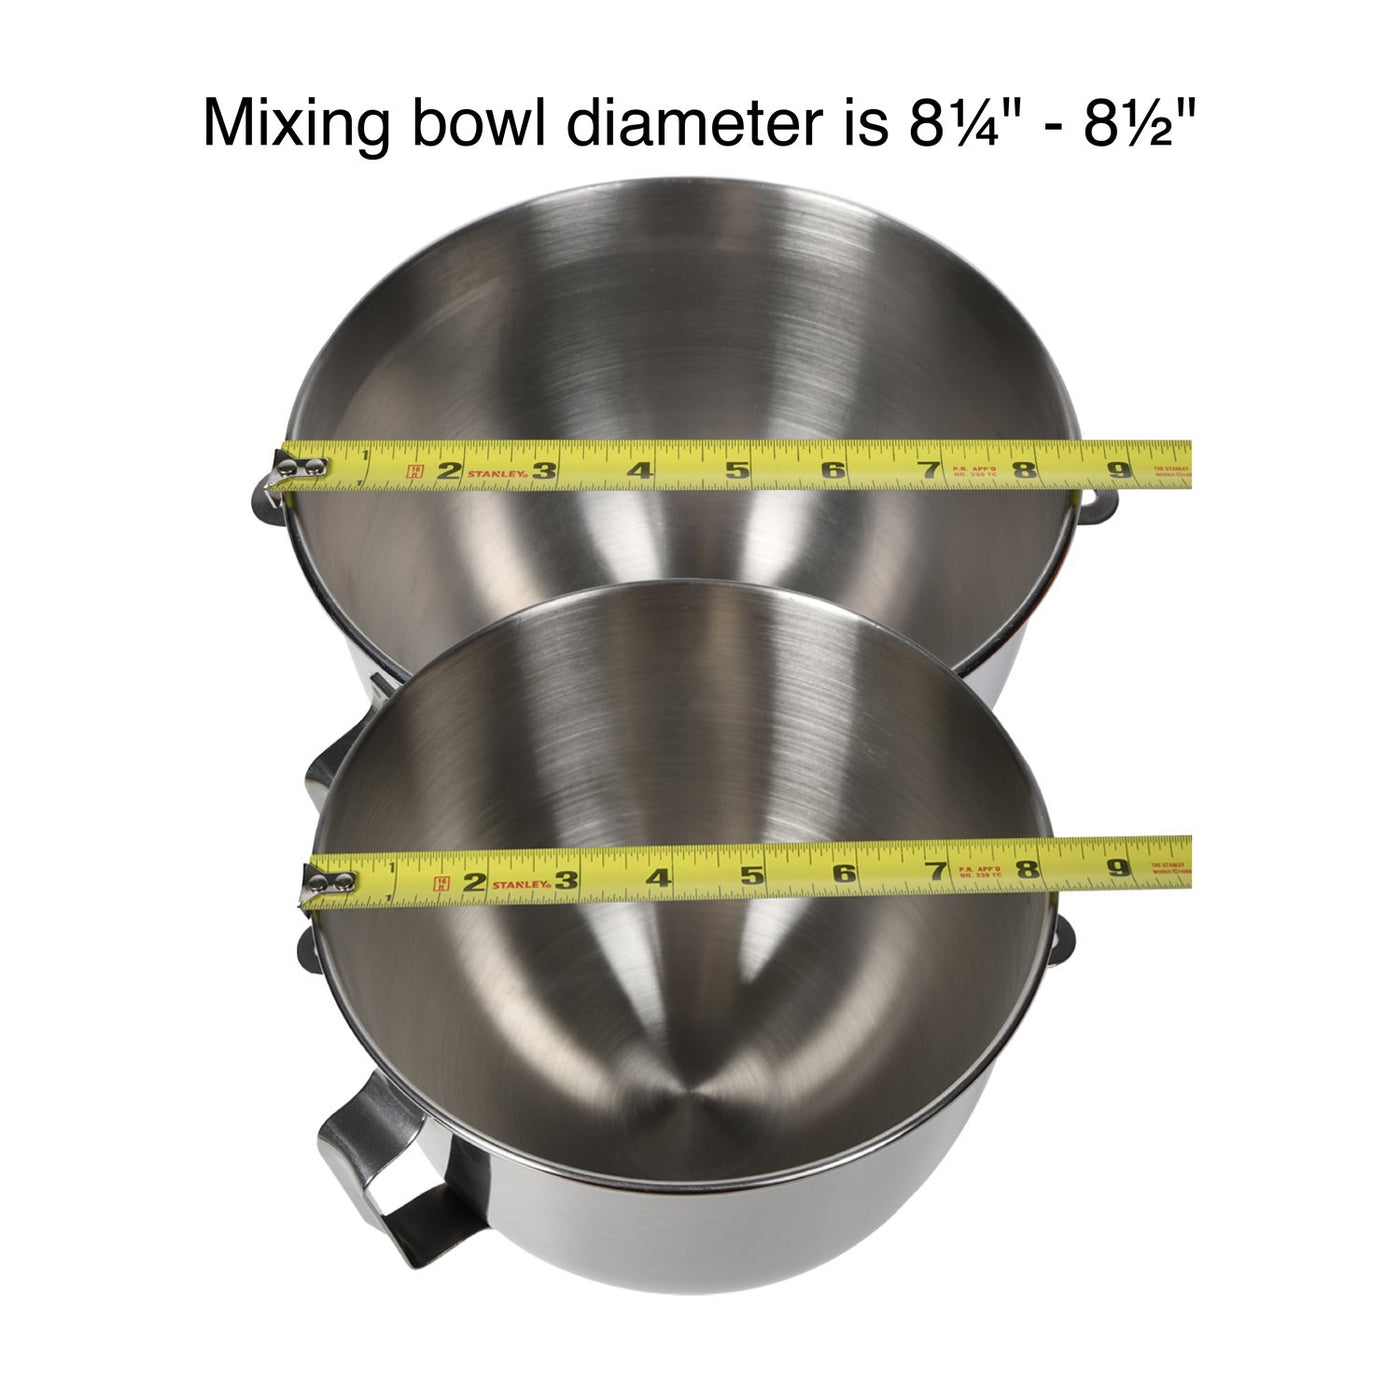 Plastic Frame KA-5L BeaterBlade / Fits KitchenAid Bowl-Lift Mixer